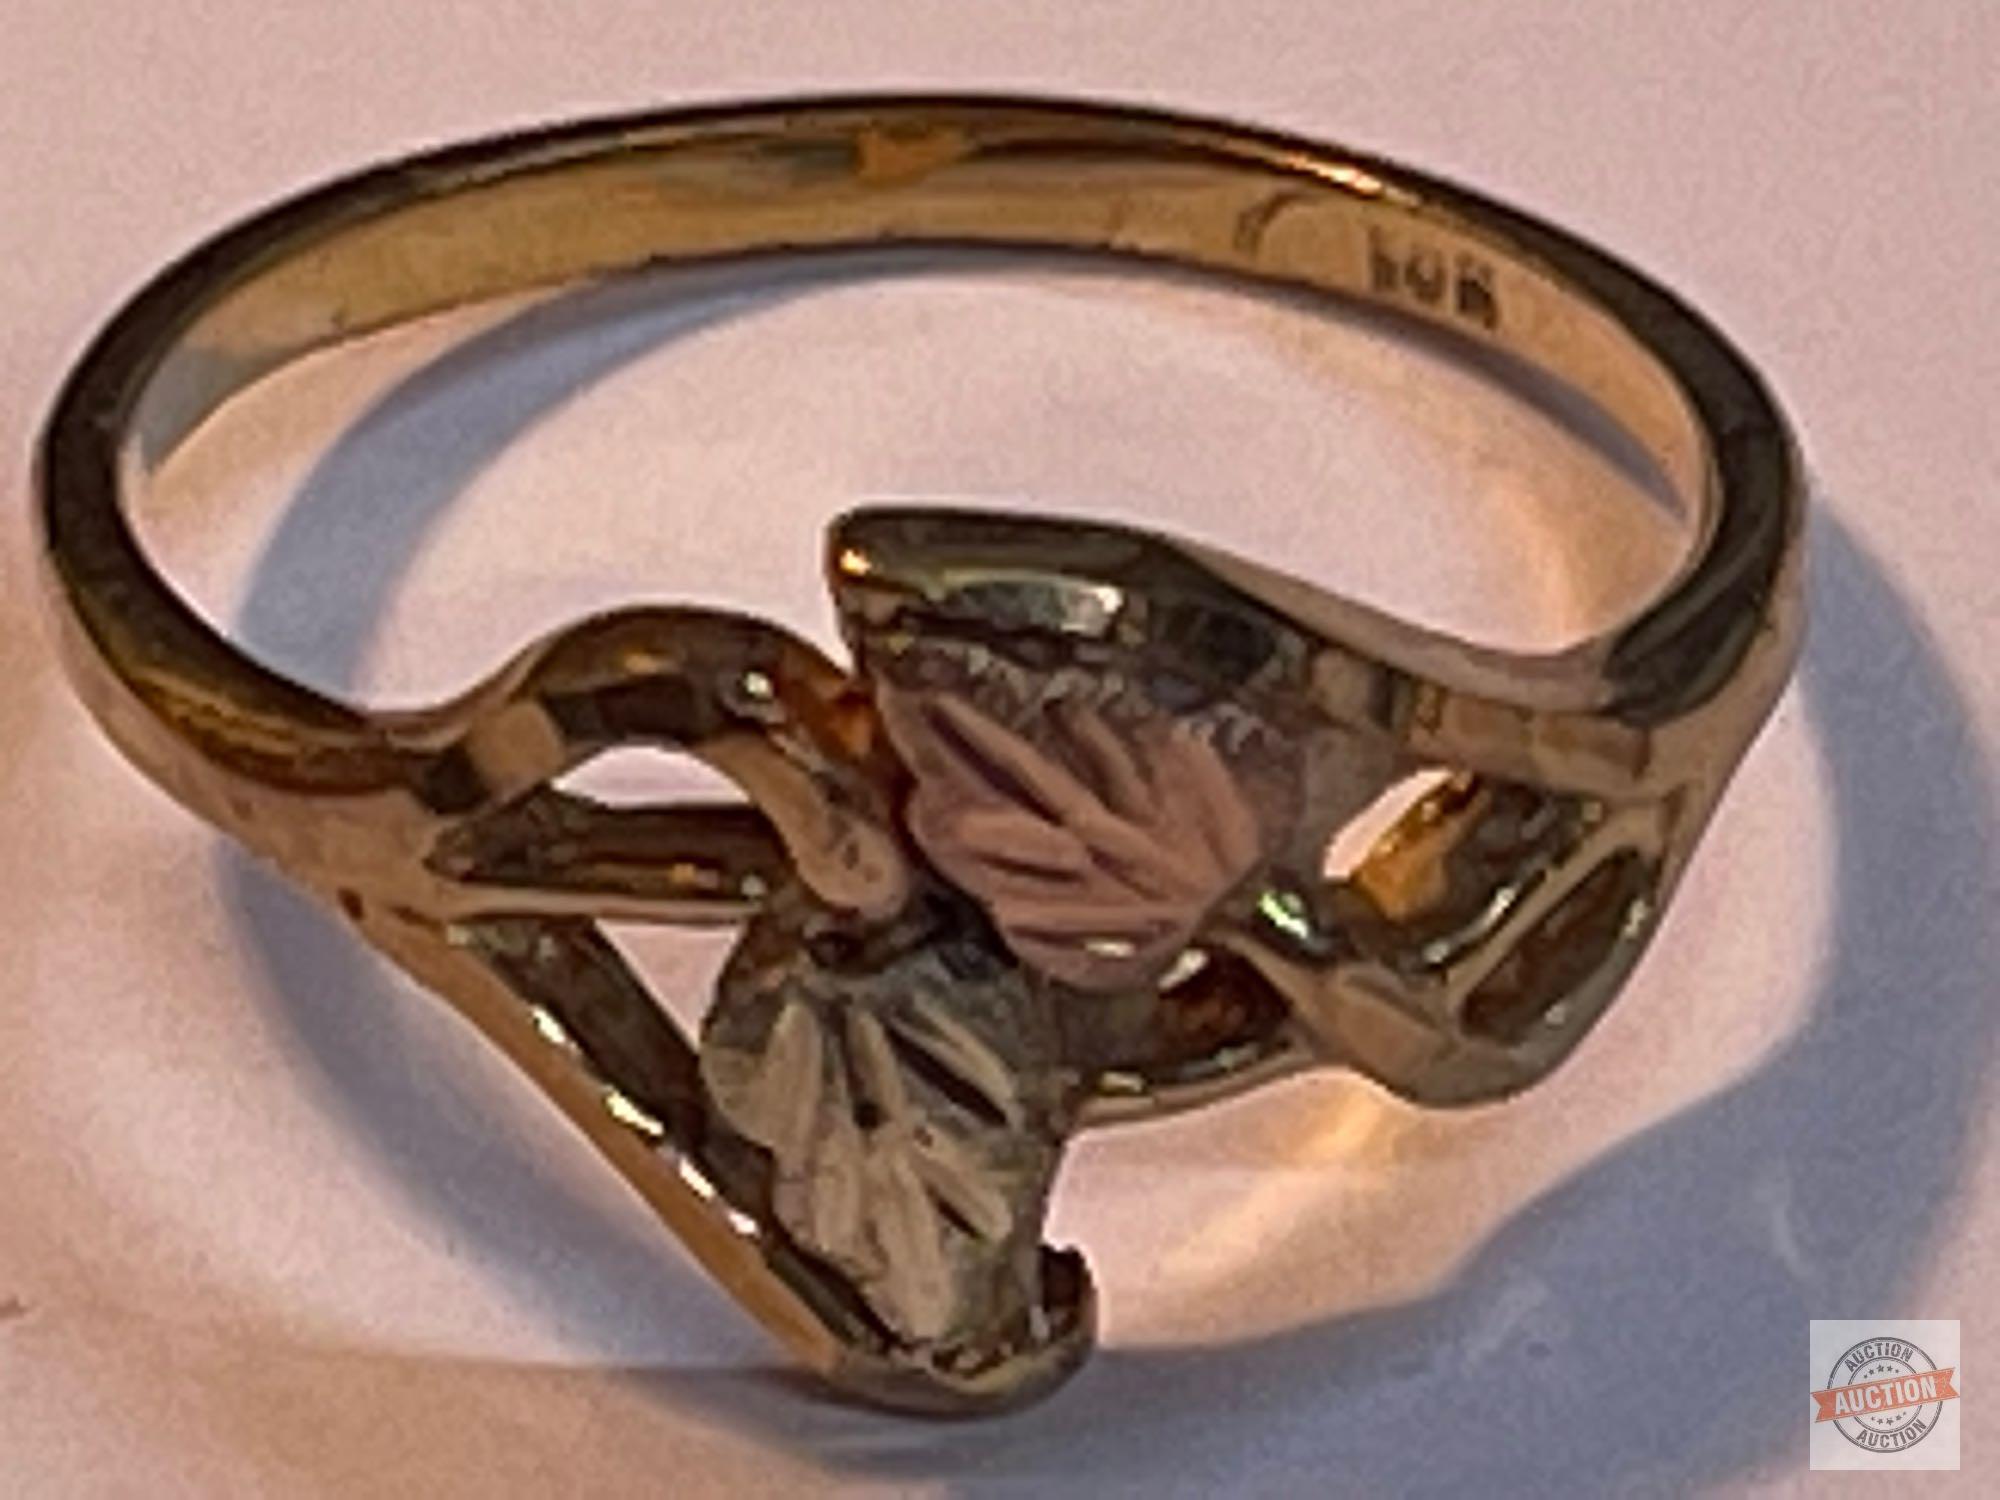 Jewelry - Ring, 10k Black Hills gold